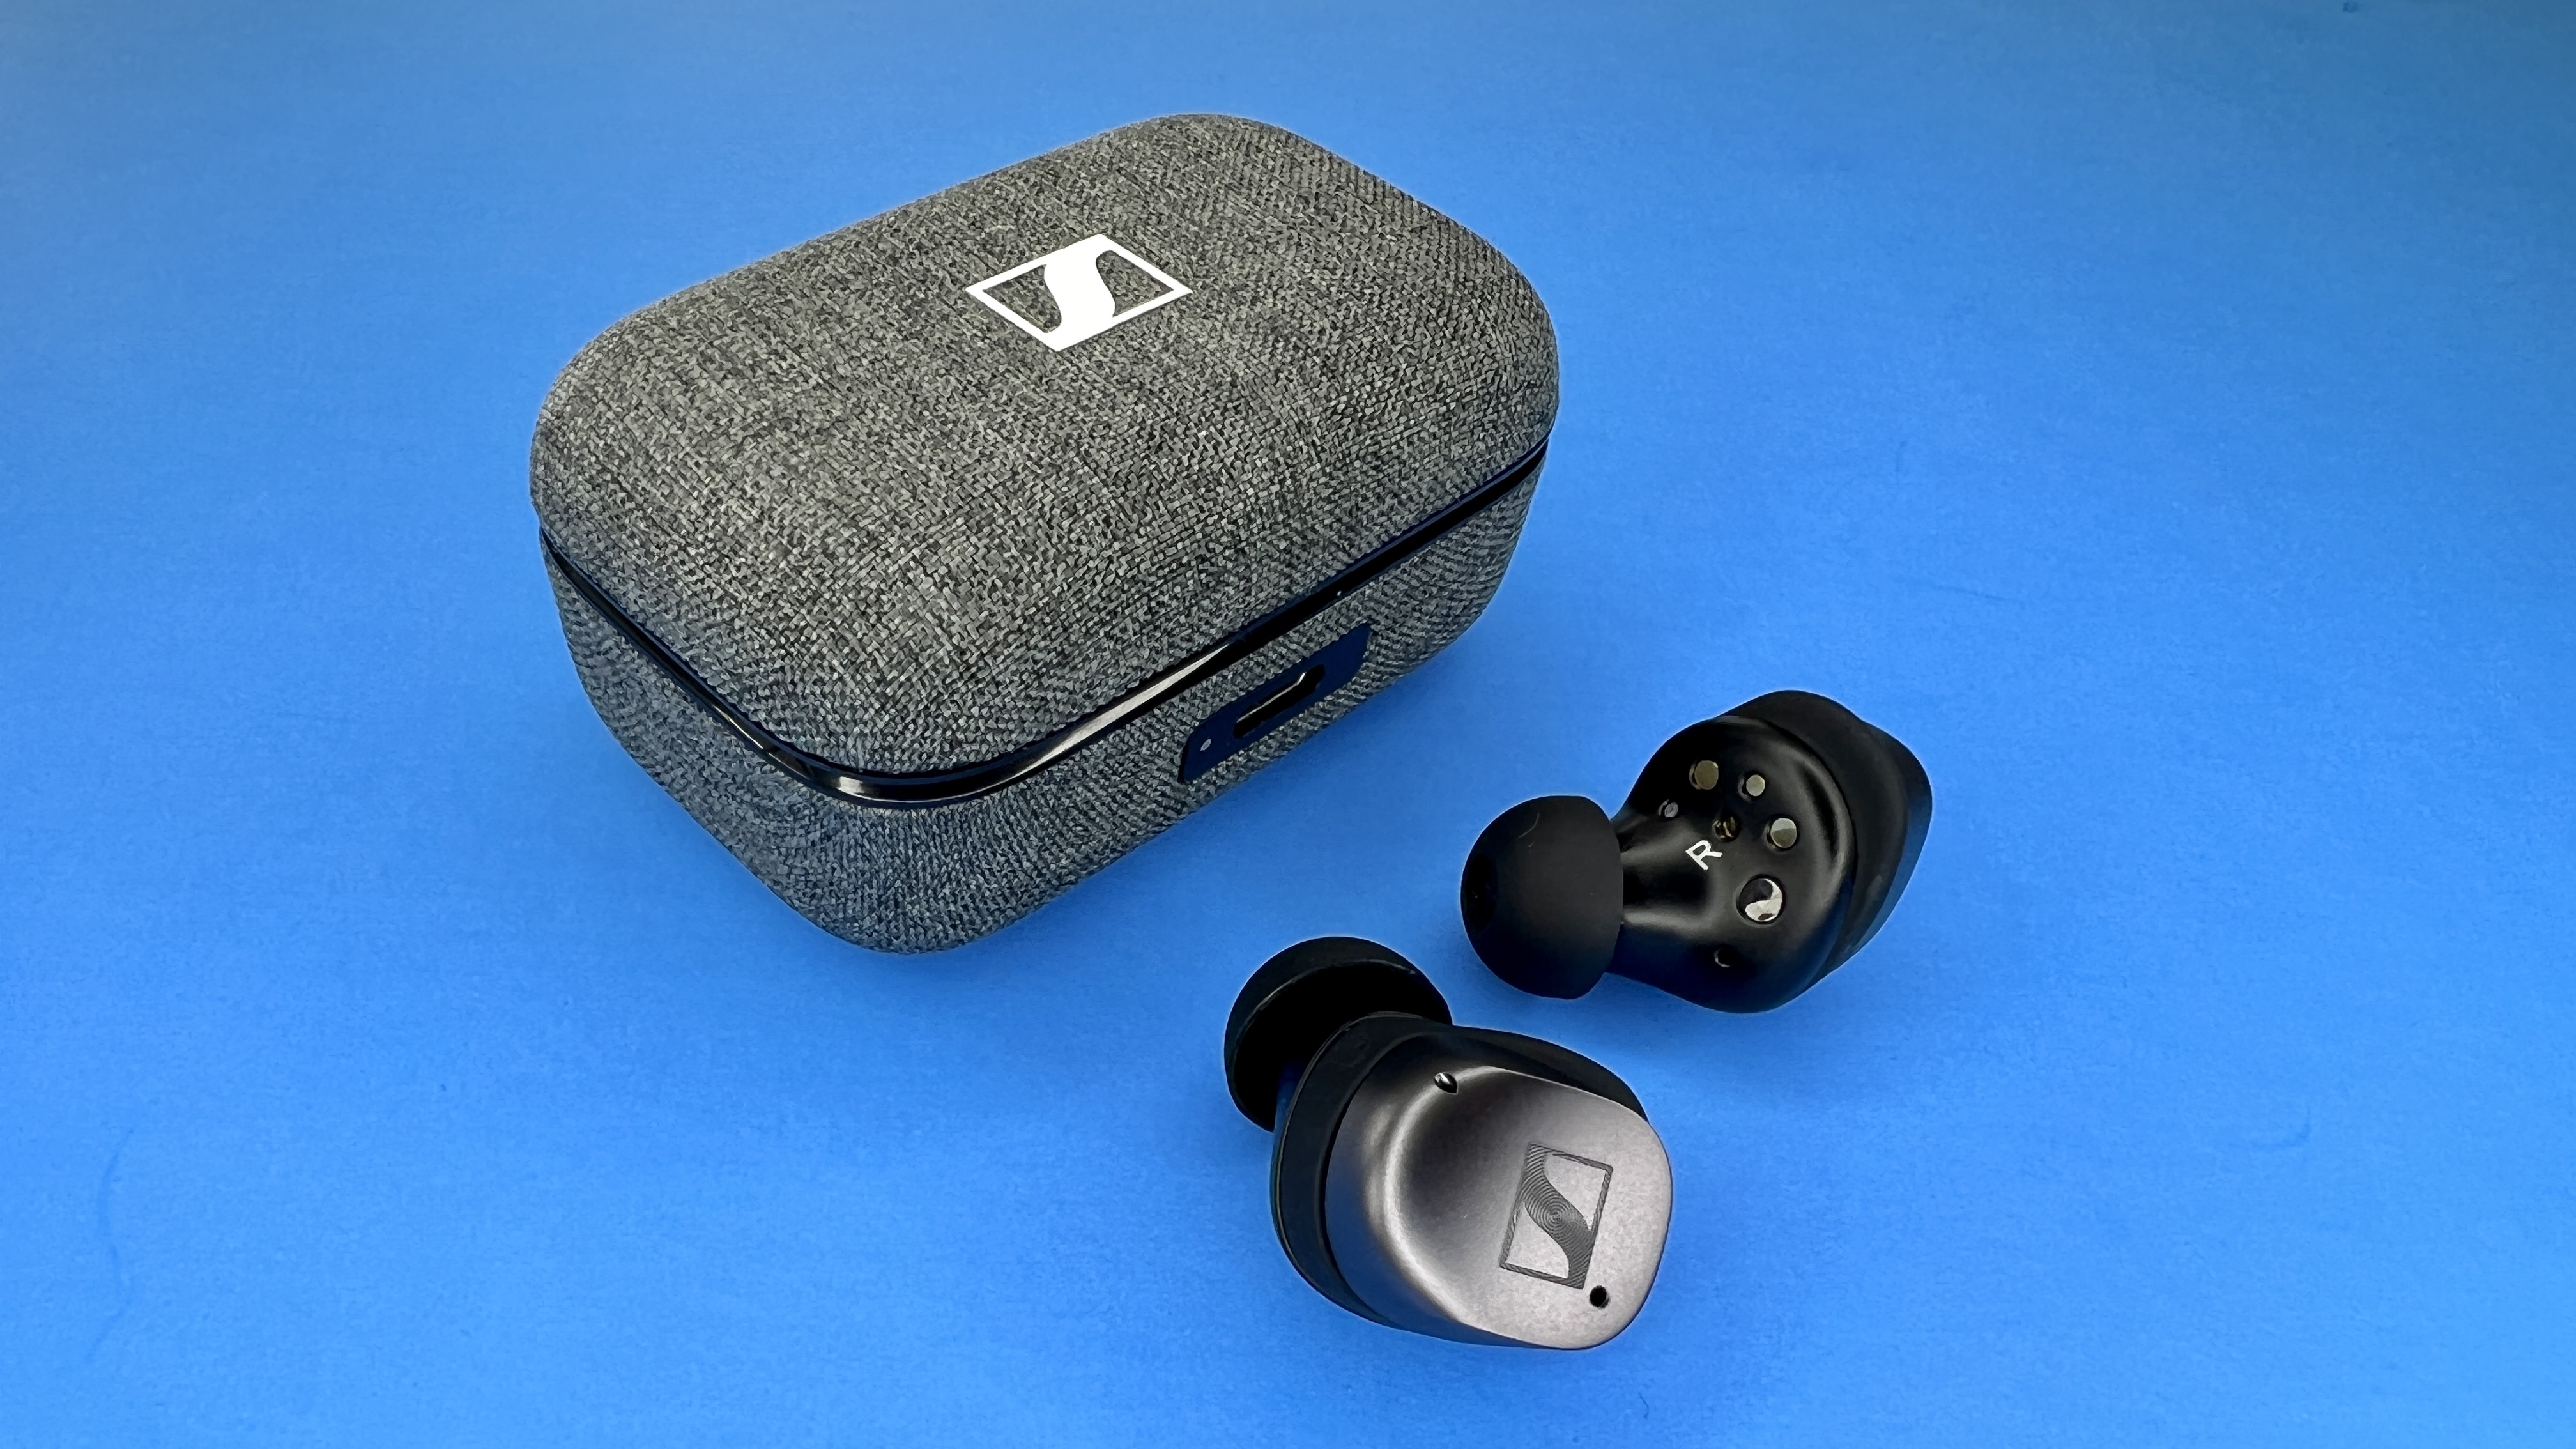 JBL LIVE FLEX True Wireless Bluetooth Headphones Active Noise Cancellation  Call Music Semi-In-Ear Type